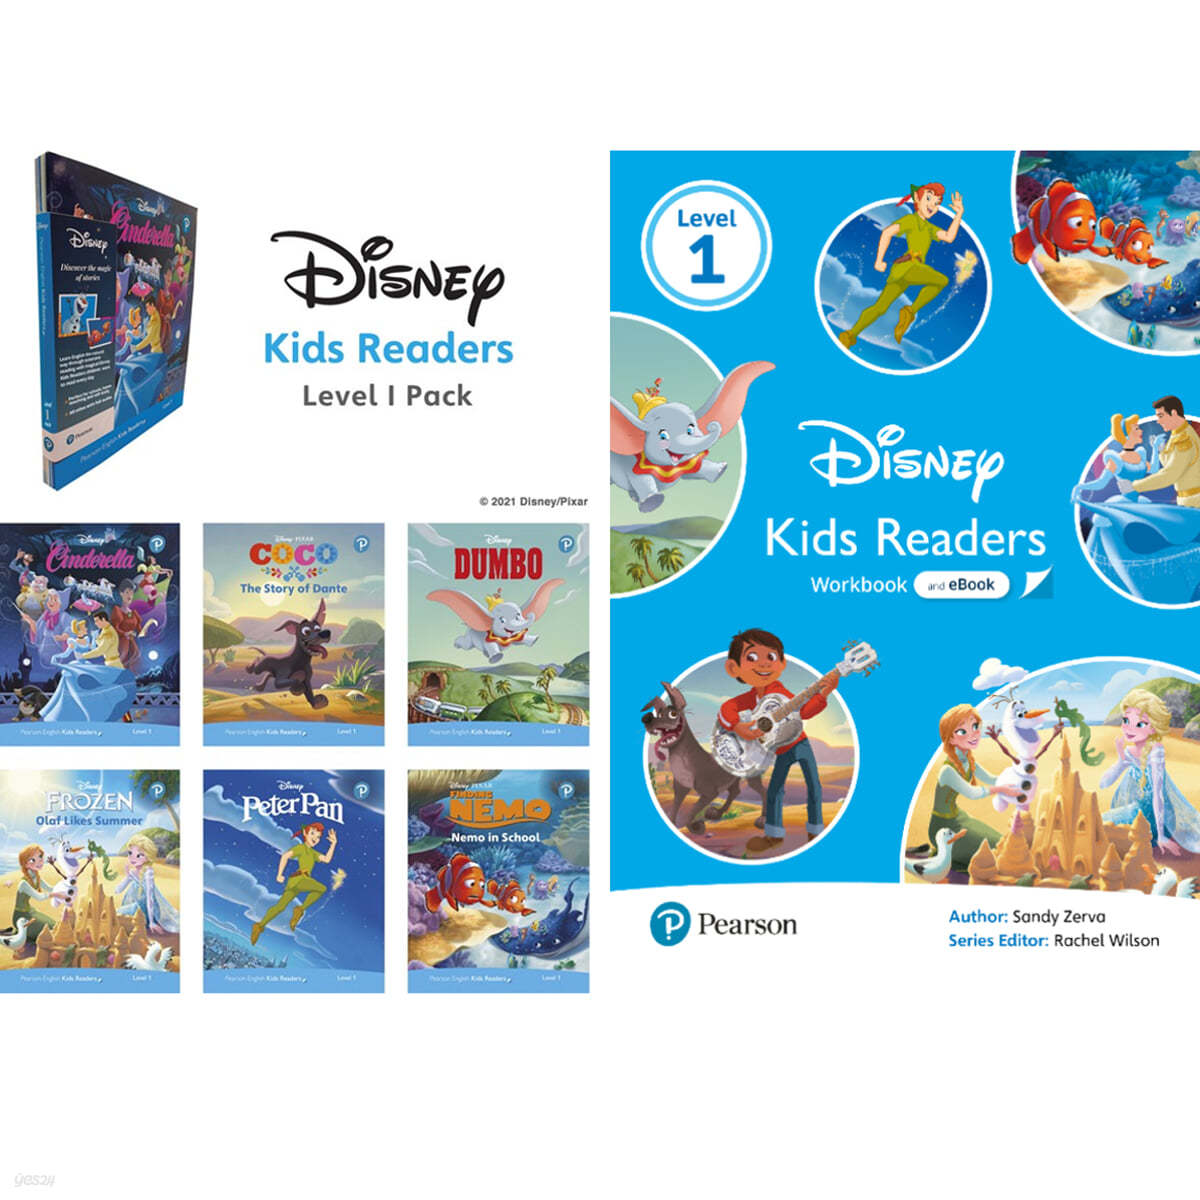 Disney Kids Readers Level 1 세트 (Pack + Workbook)